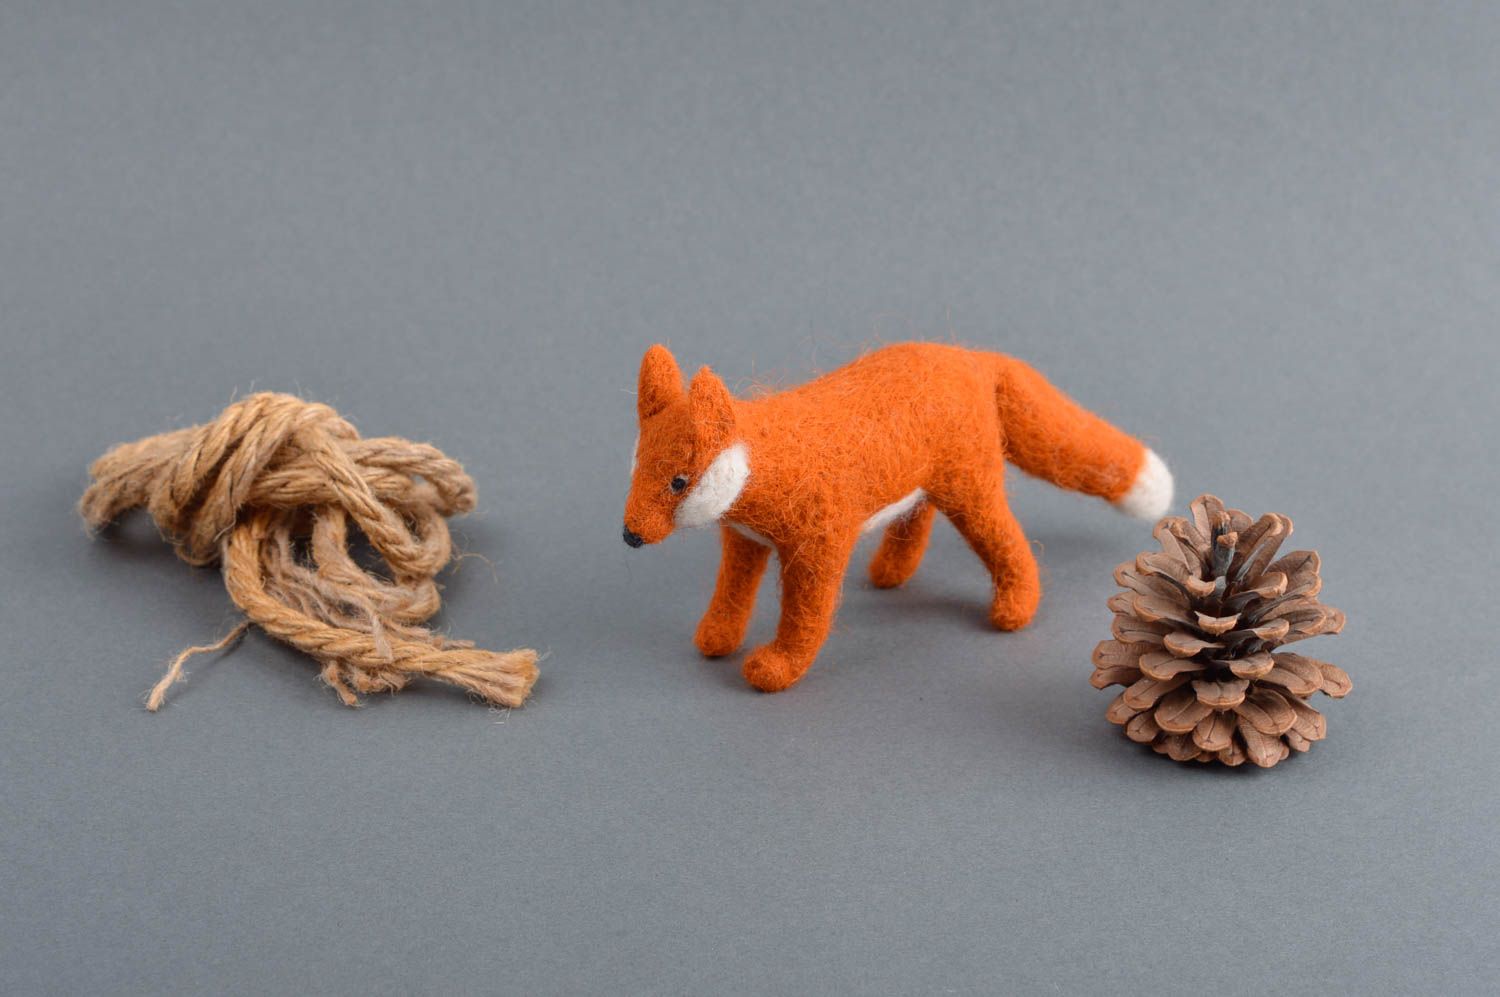 Handmade toy unusual toy for children decor ideas woolen animal toy gift ideas photo 1